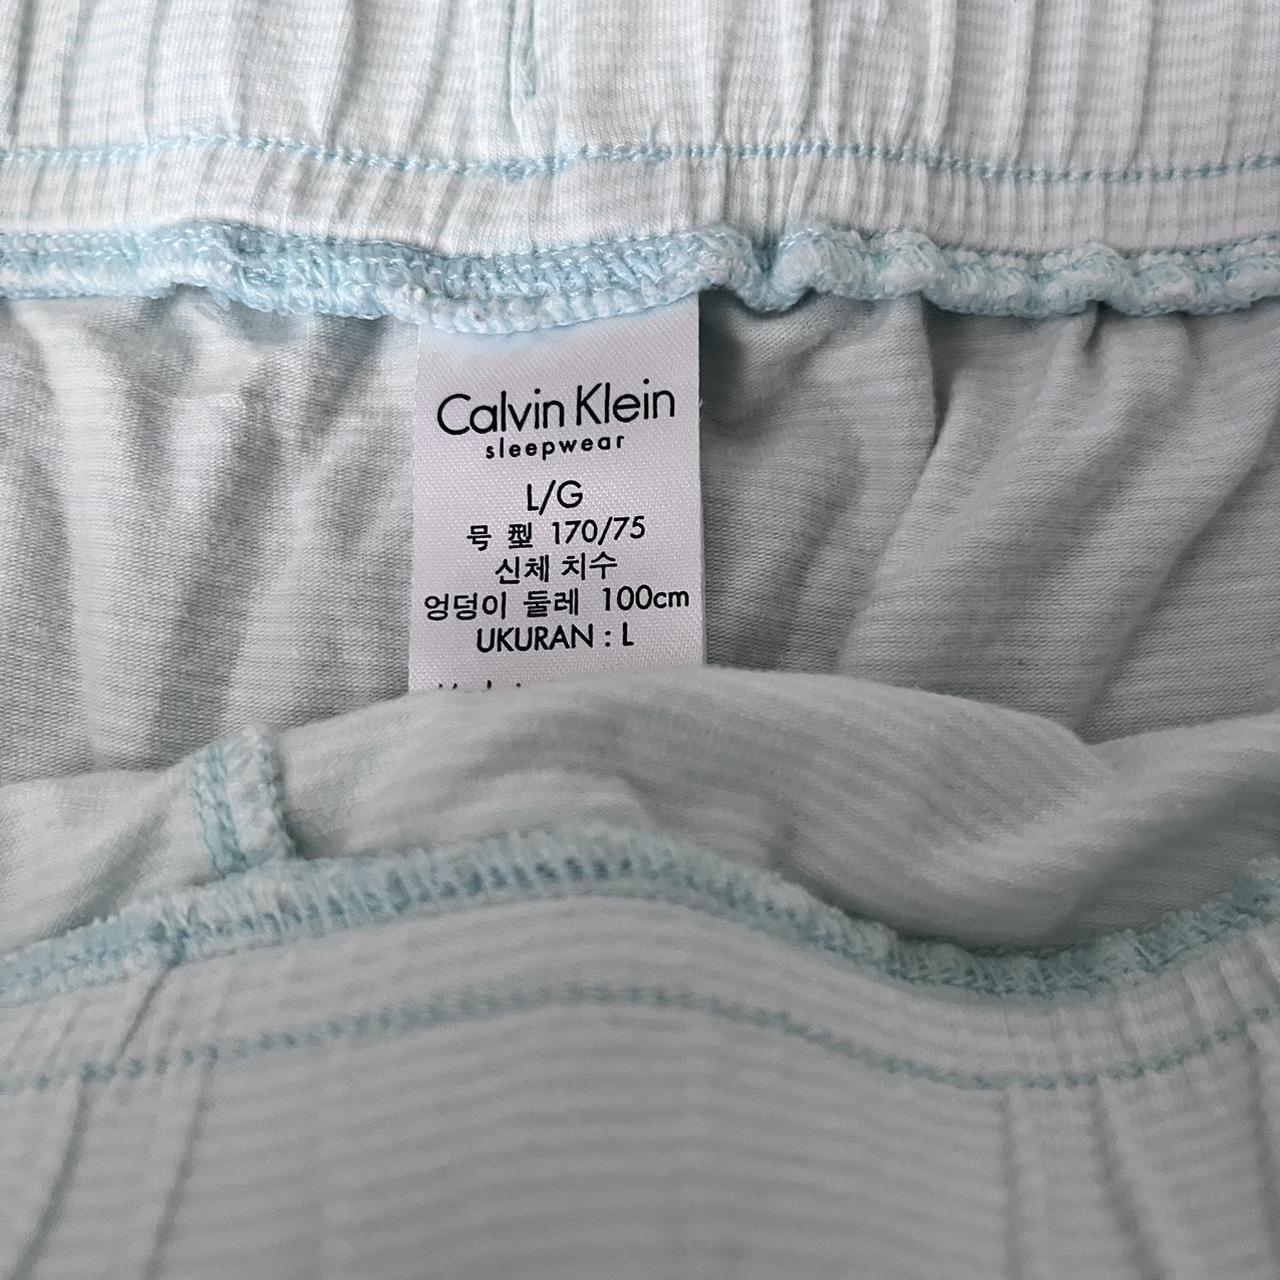 ︎︎ Calvin Klein pajama shorts • Light blue and... - Depop